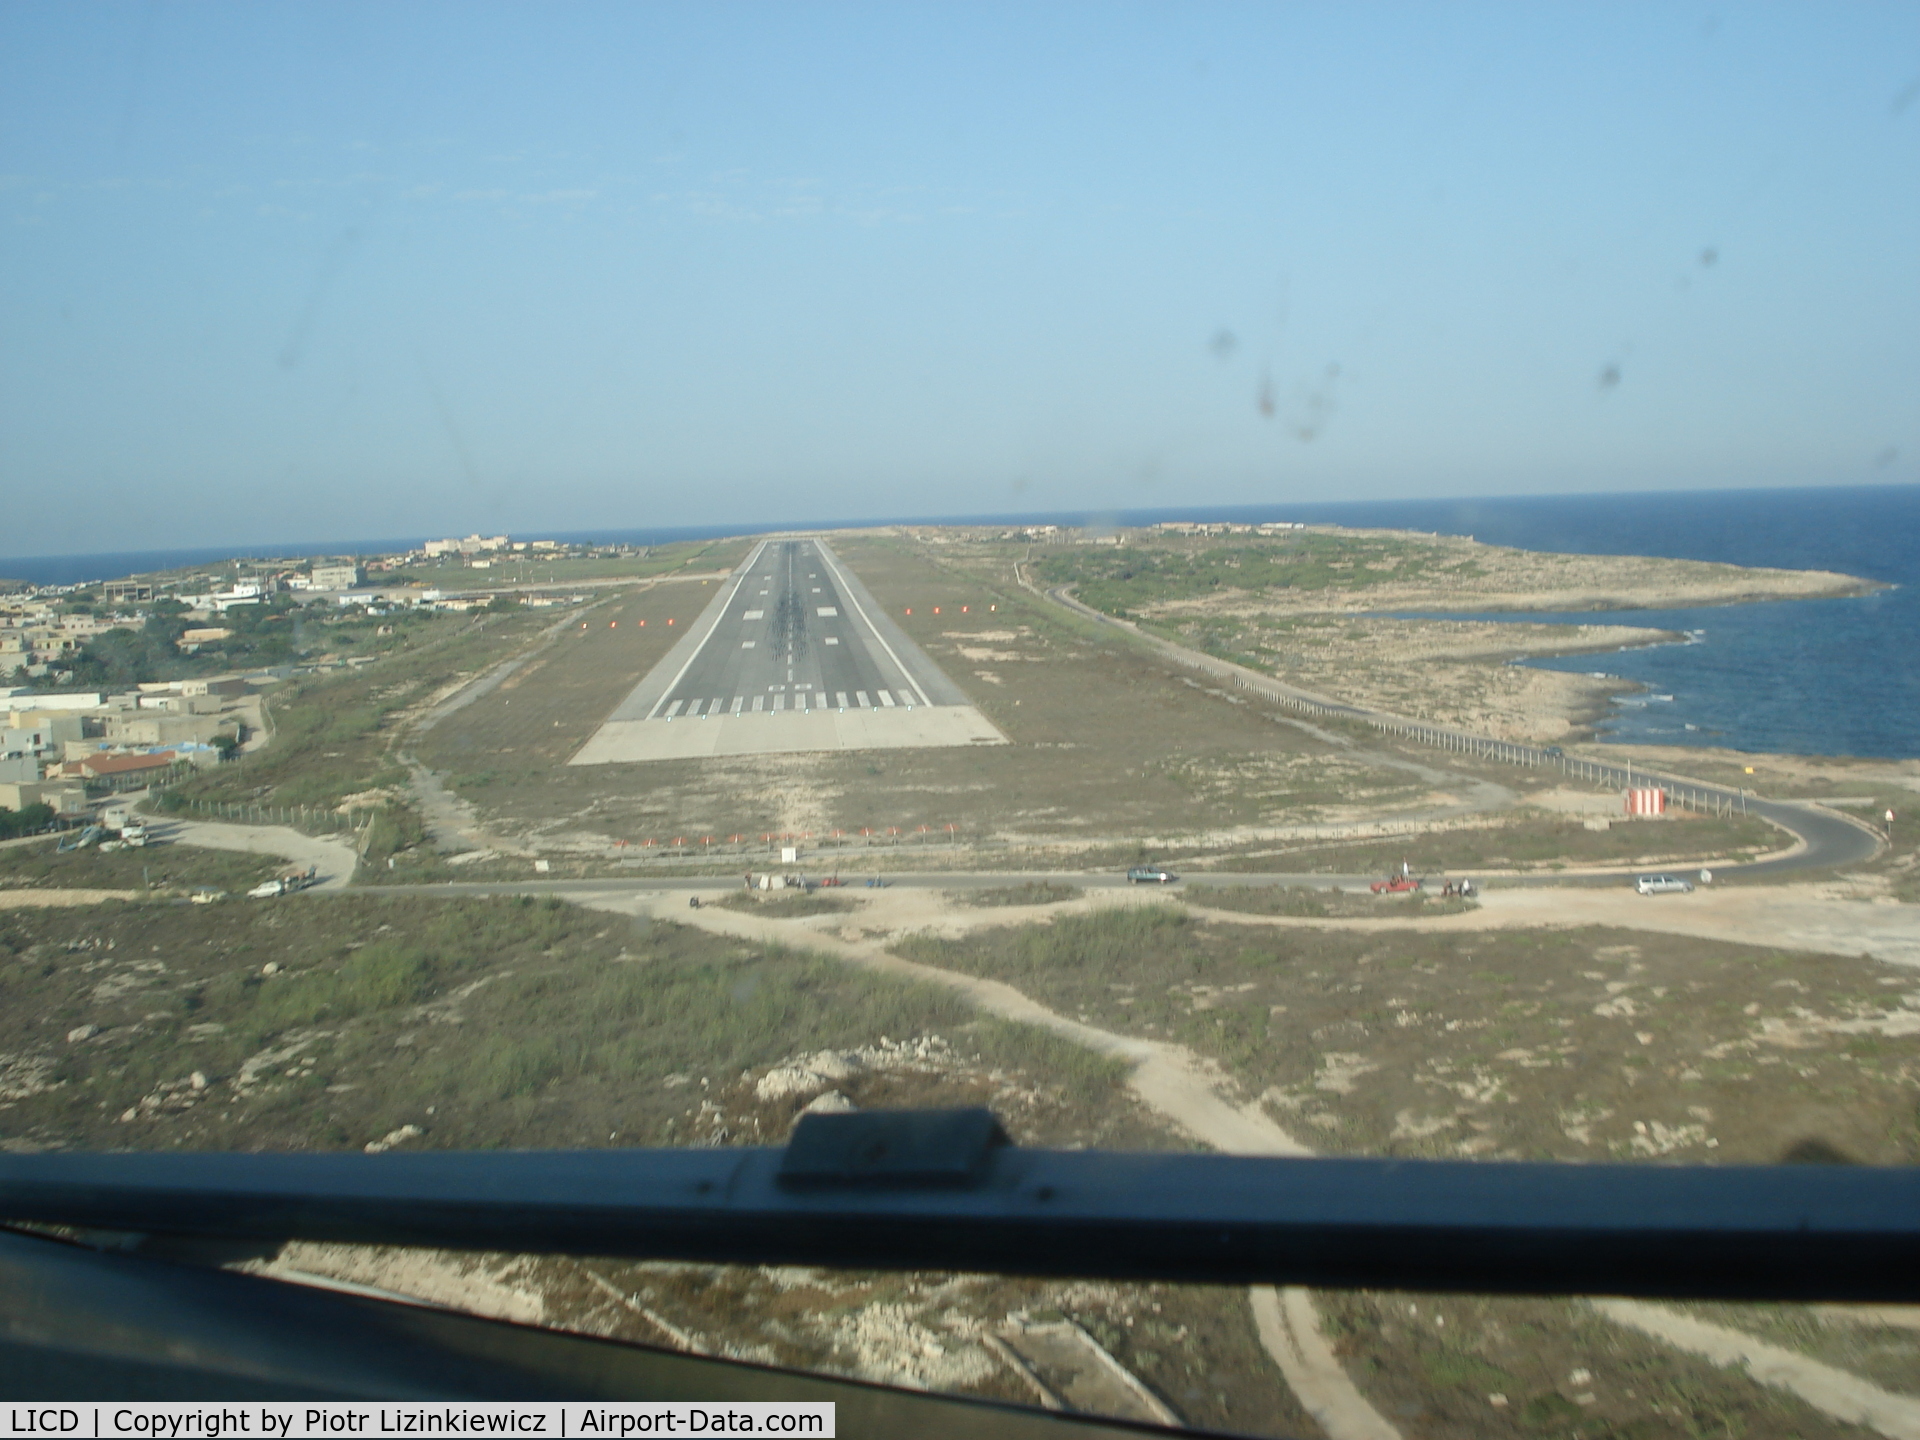 Lampedusa Airport, Lampedusa Italy (LICD) - on final